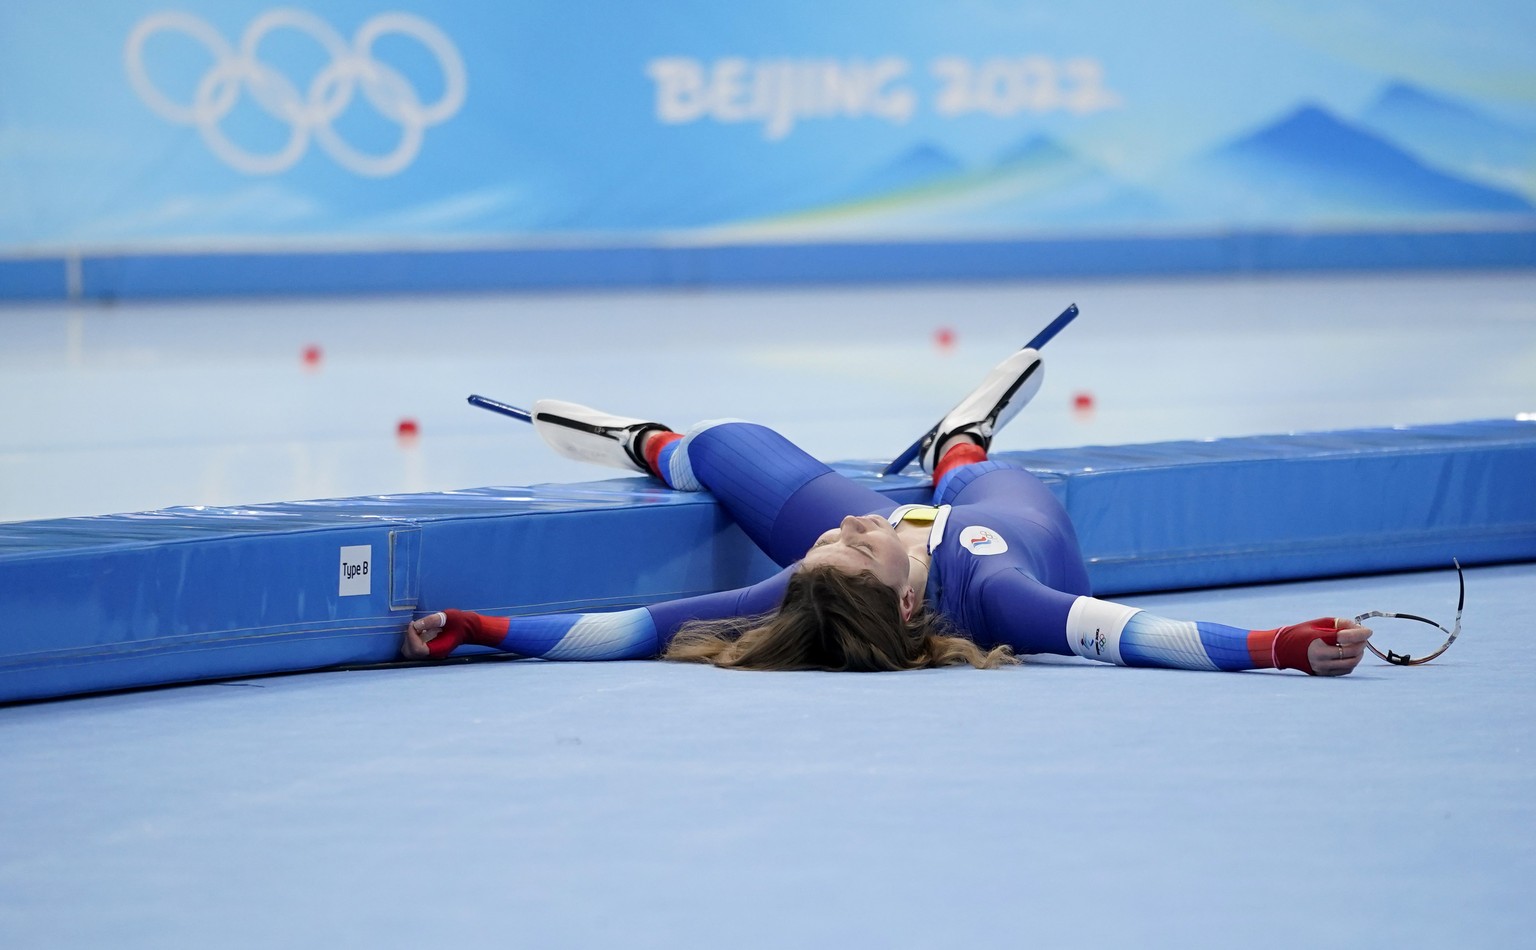 Olga Fatkulina fiel nach dem 1000-Meter-Rennen völlig erschöpft zu Boden.